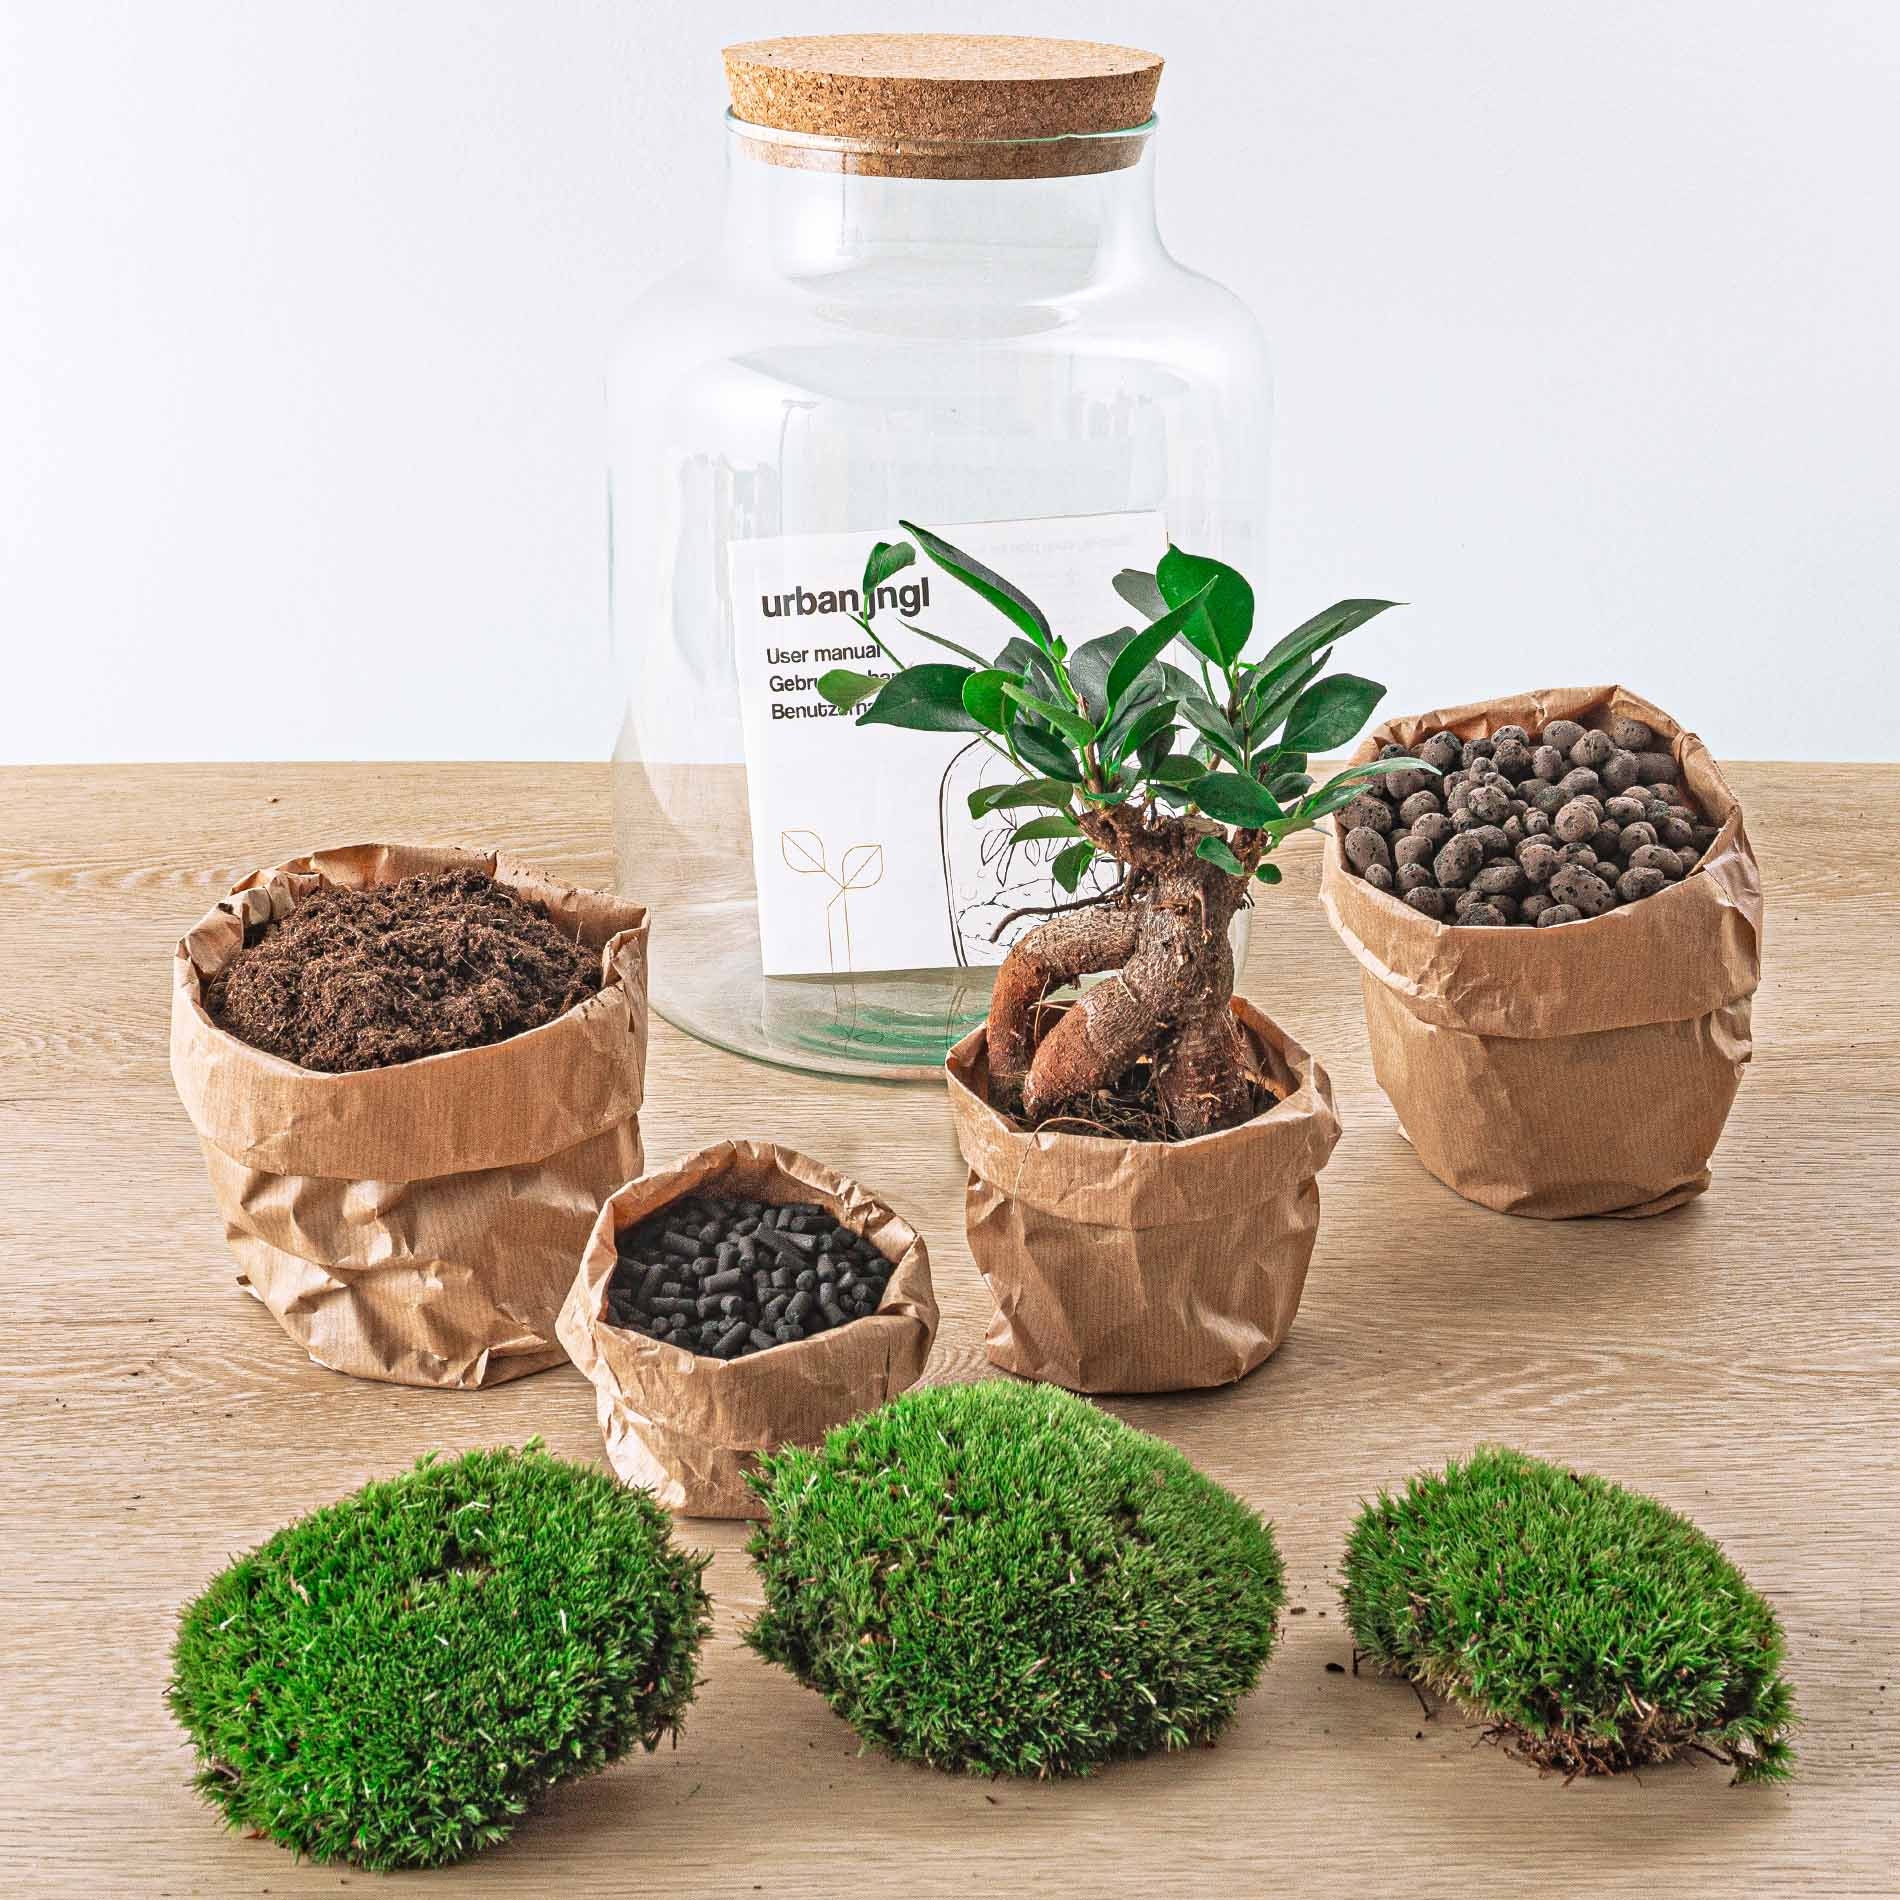 DIY Terrarium Kit: Build Your Own Terrarium with Ficus Bonsai